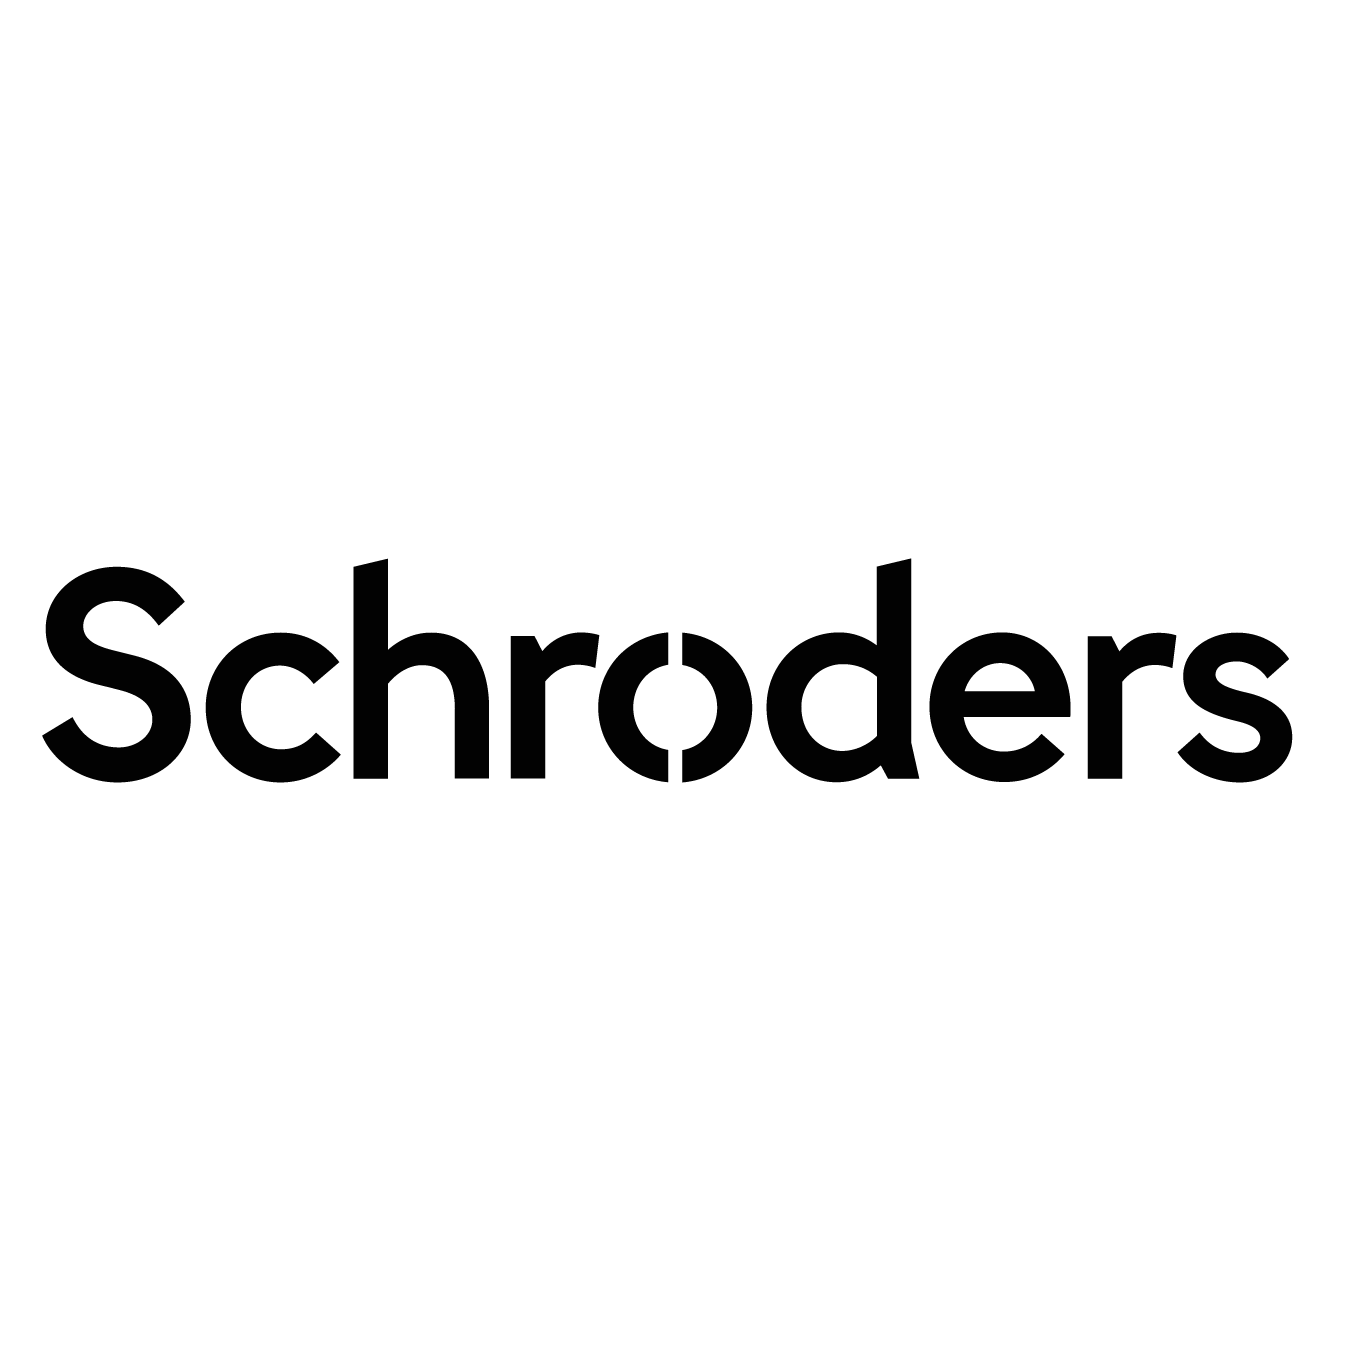 schroders-logo-01